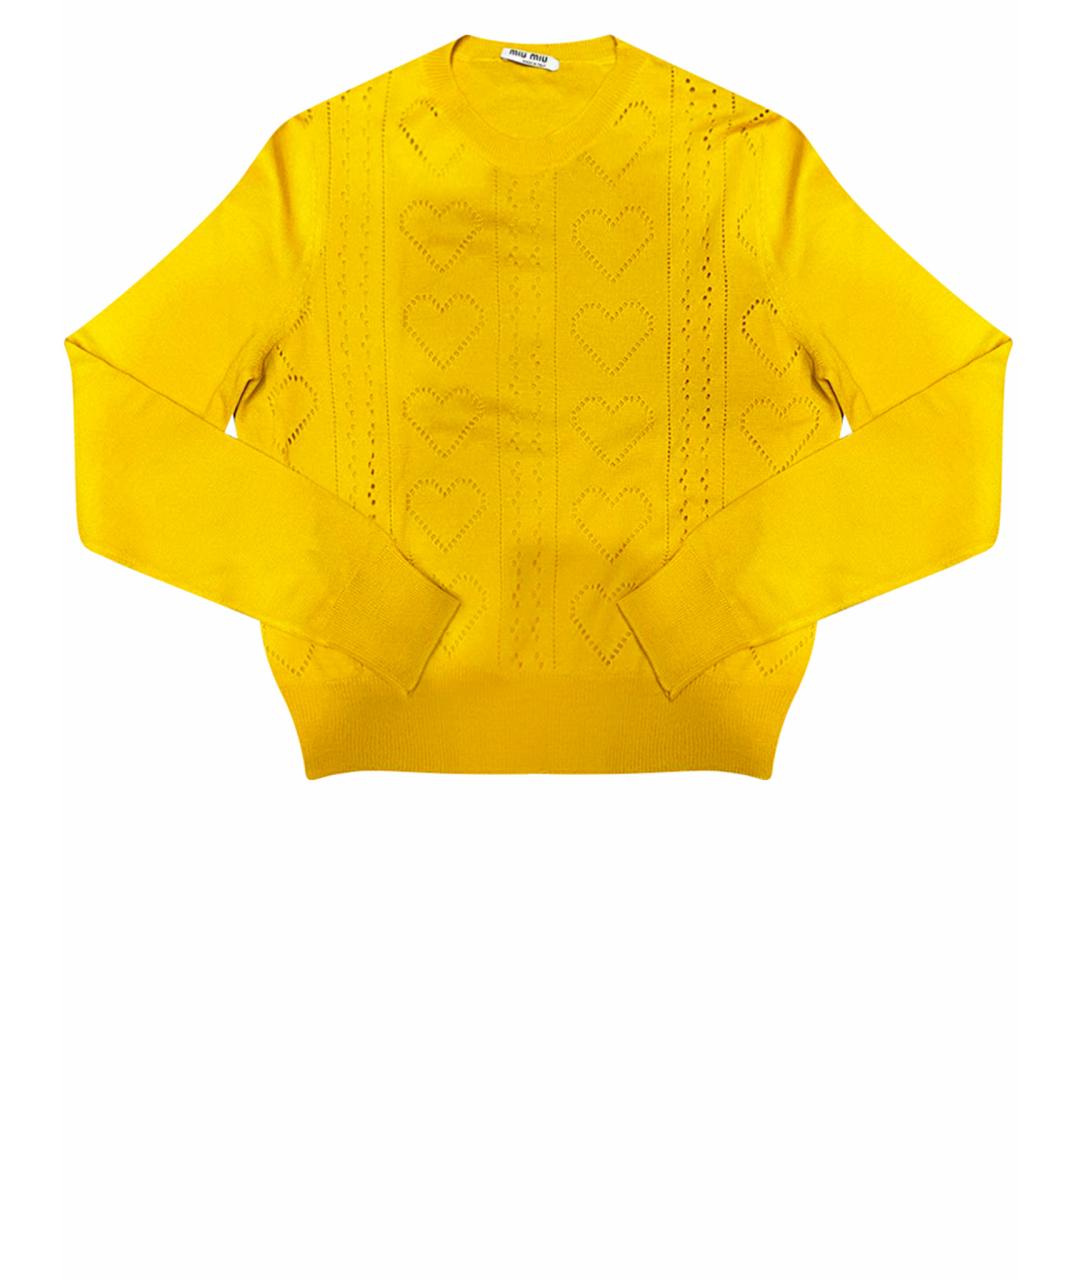 MIU MIU Желтый шерстяной джемпер / свитер, фото 1